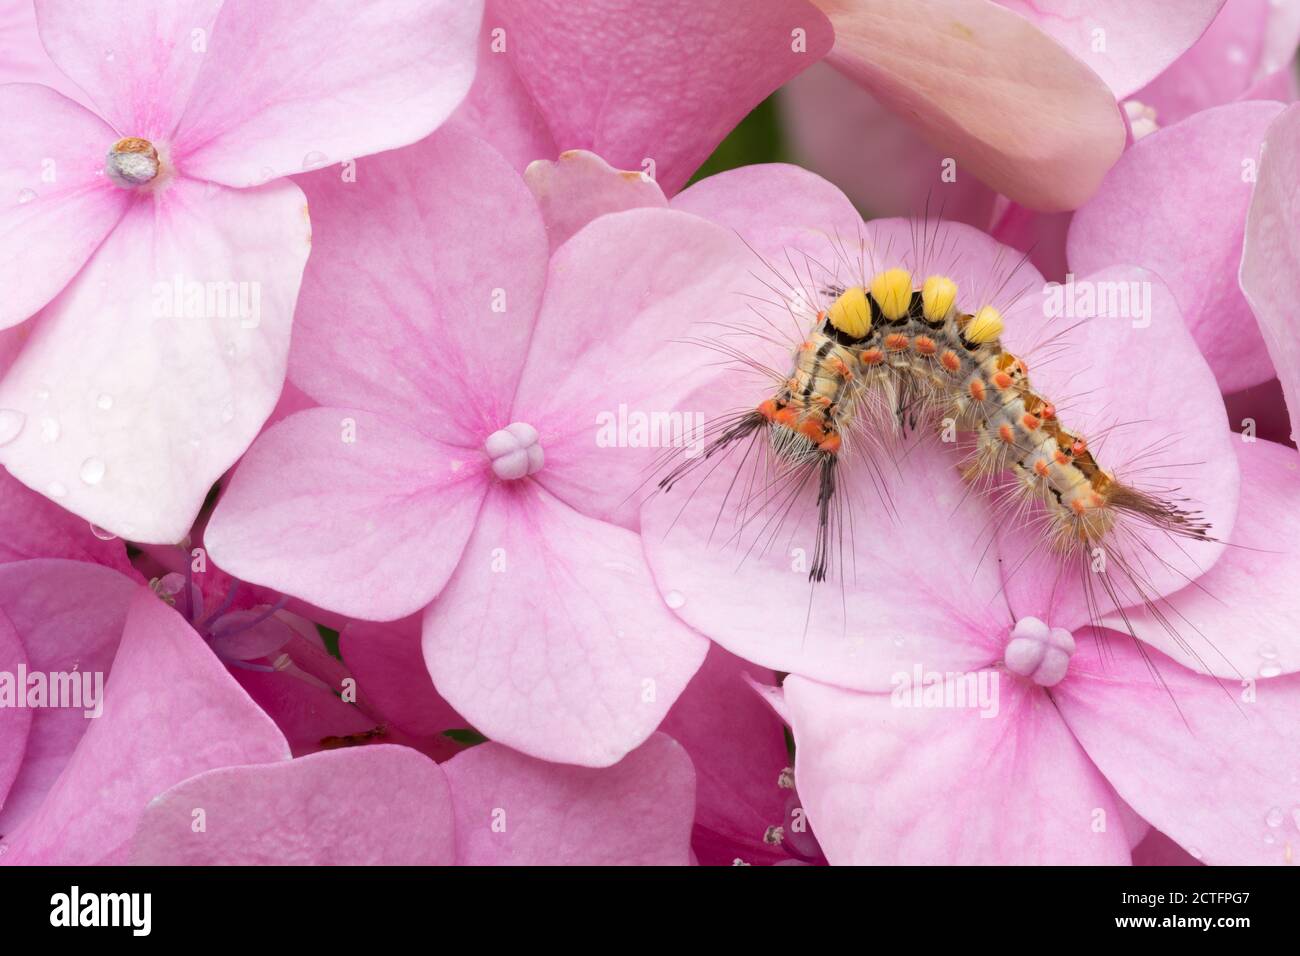 Caterpillar of Orgyia antiqua, the rusty tussock moth or vapourer. Stock Photo